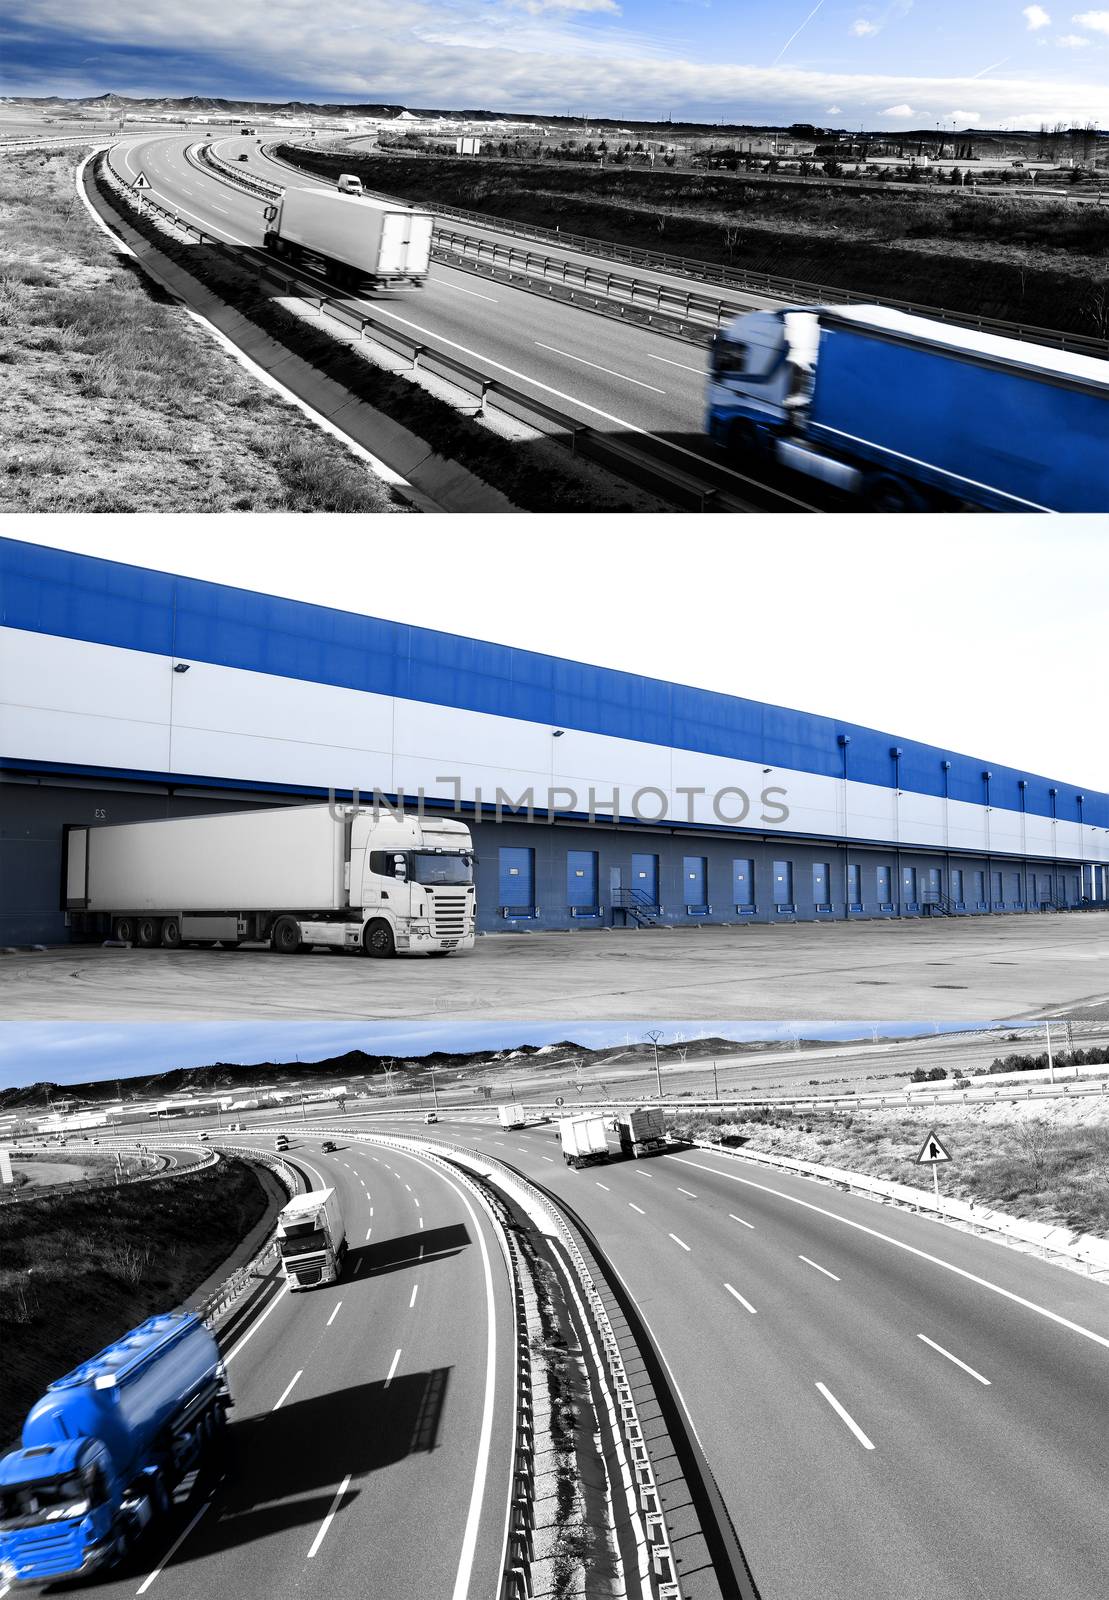 Design international shipment and highway by carloscastilla